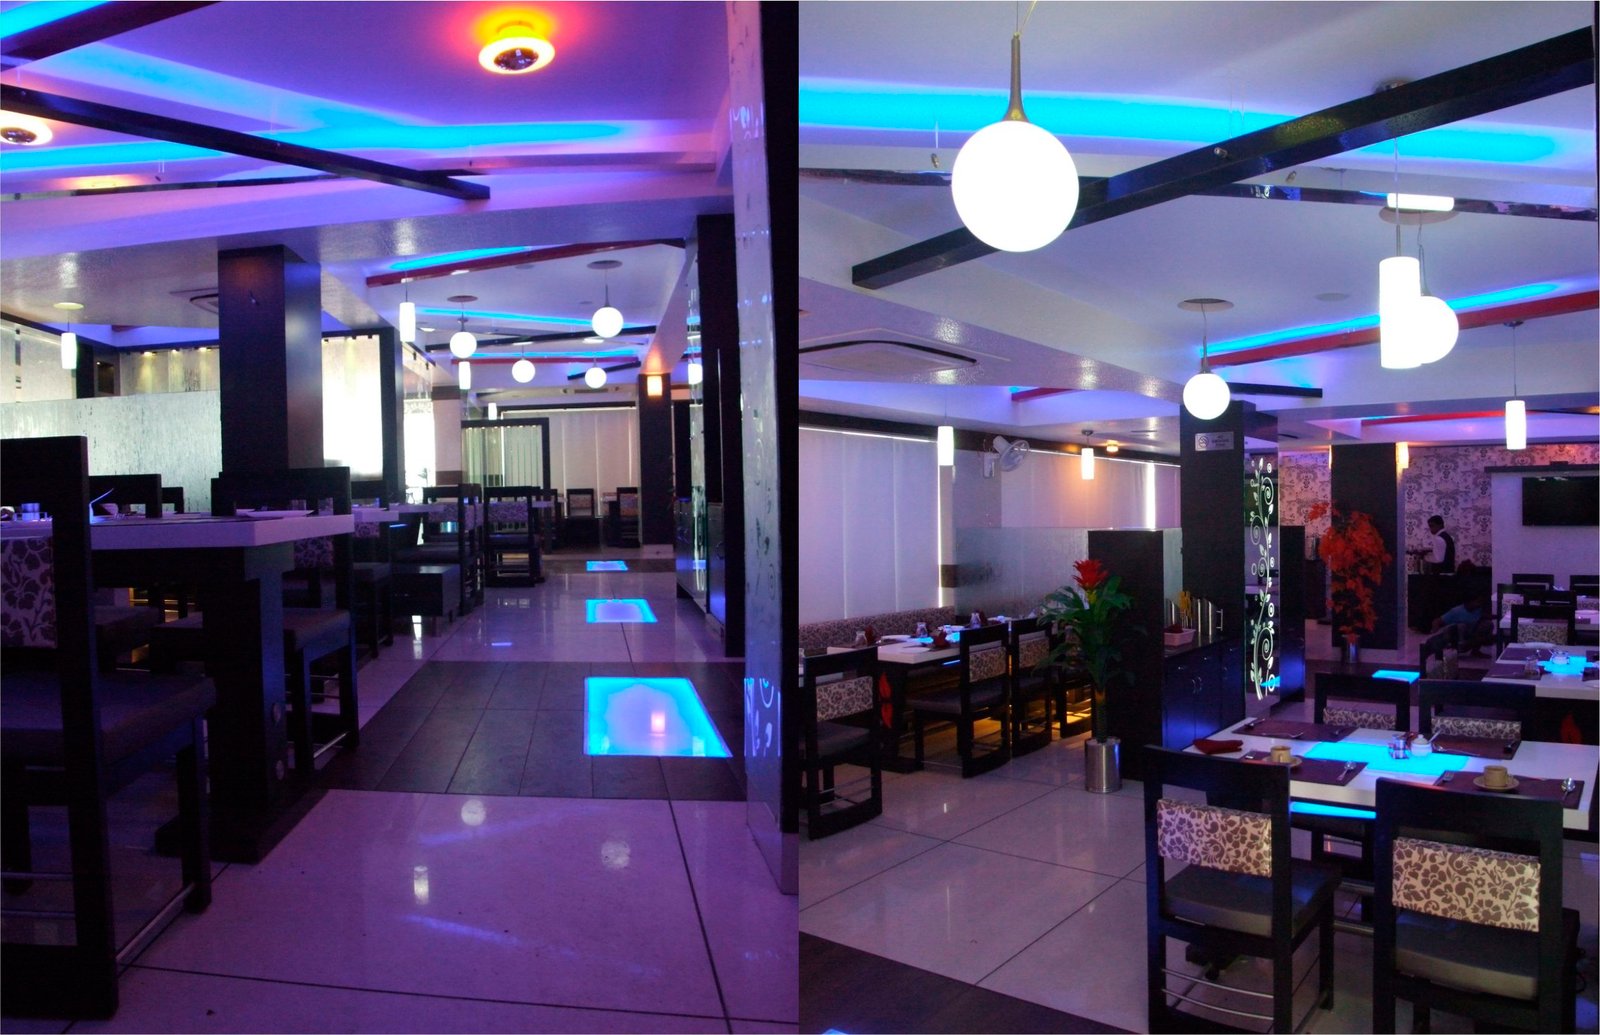 Shabri Restaurant & Banquet Hall, Ahmedabad, Gujarat, India